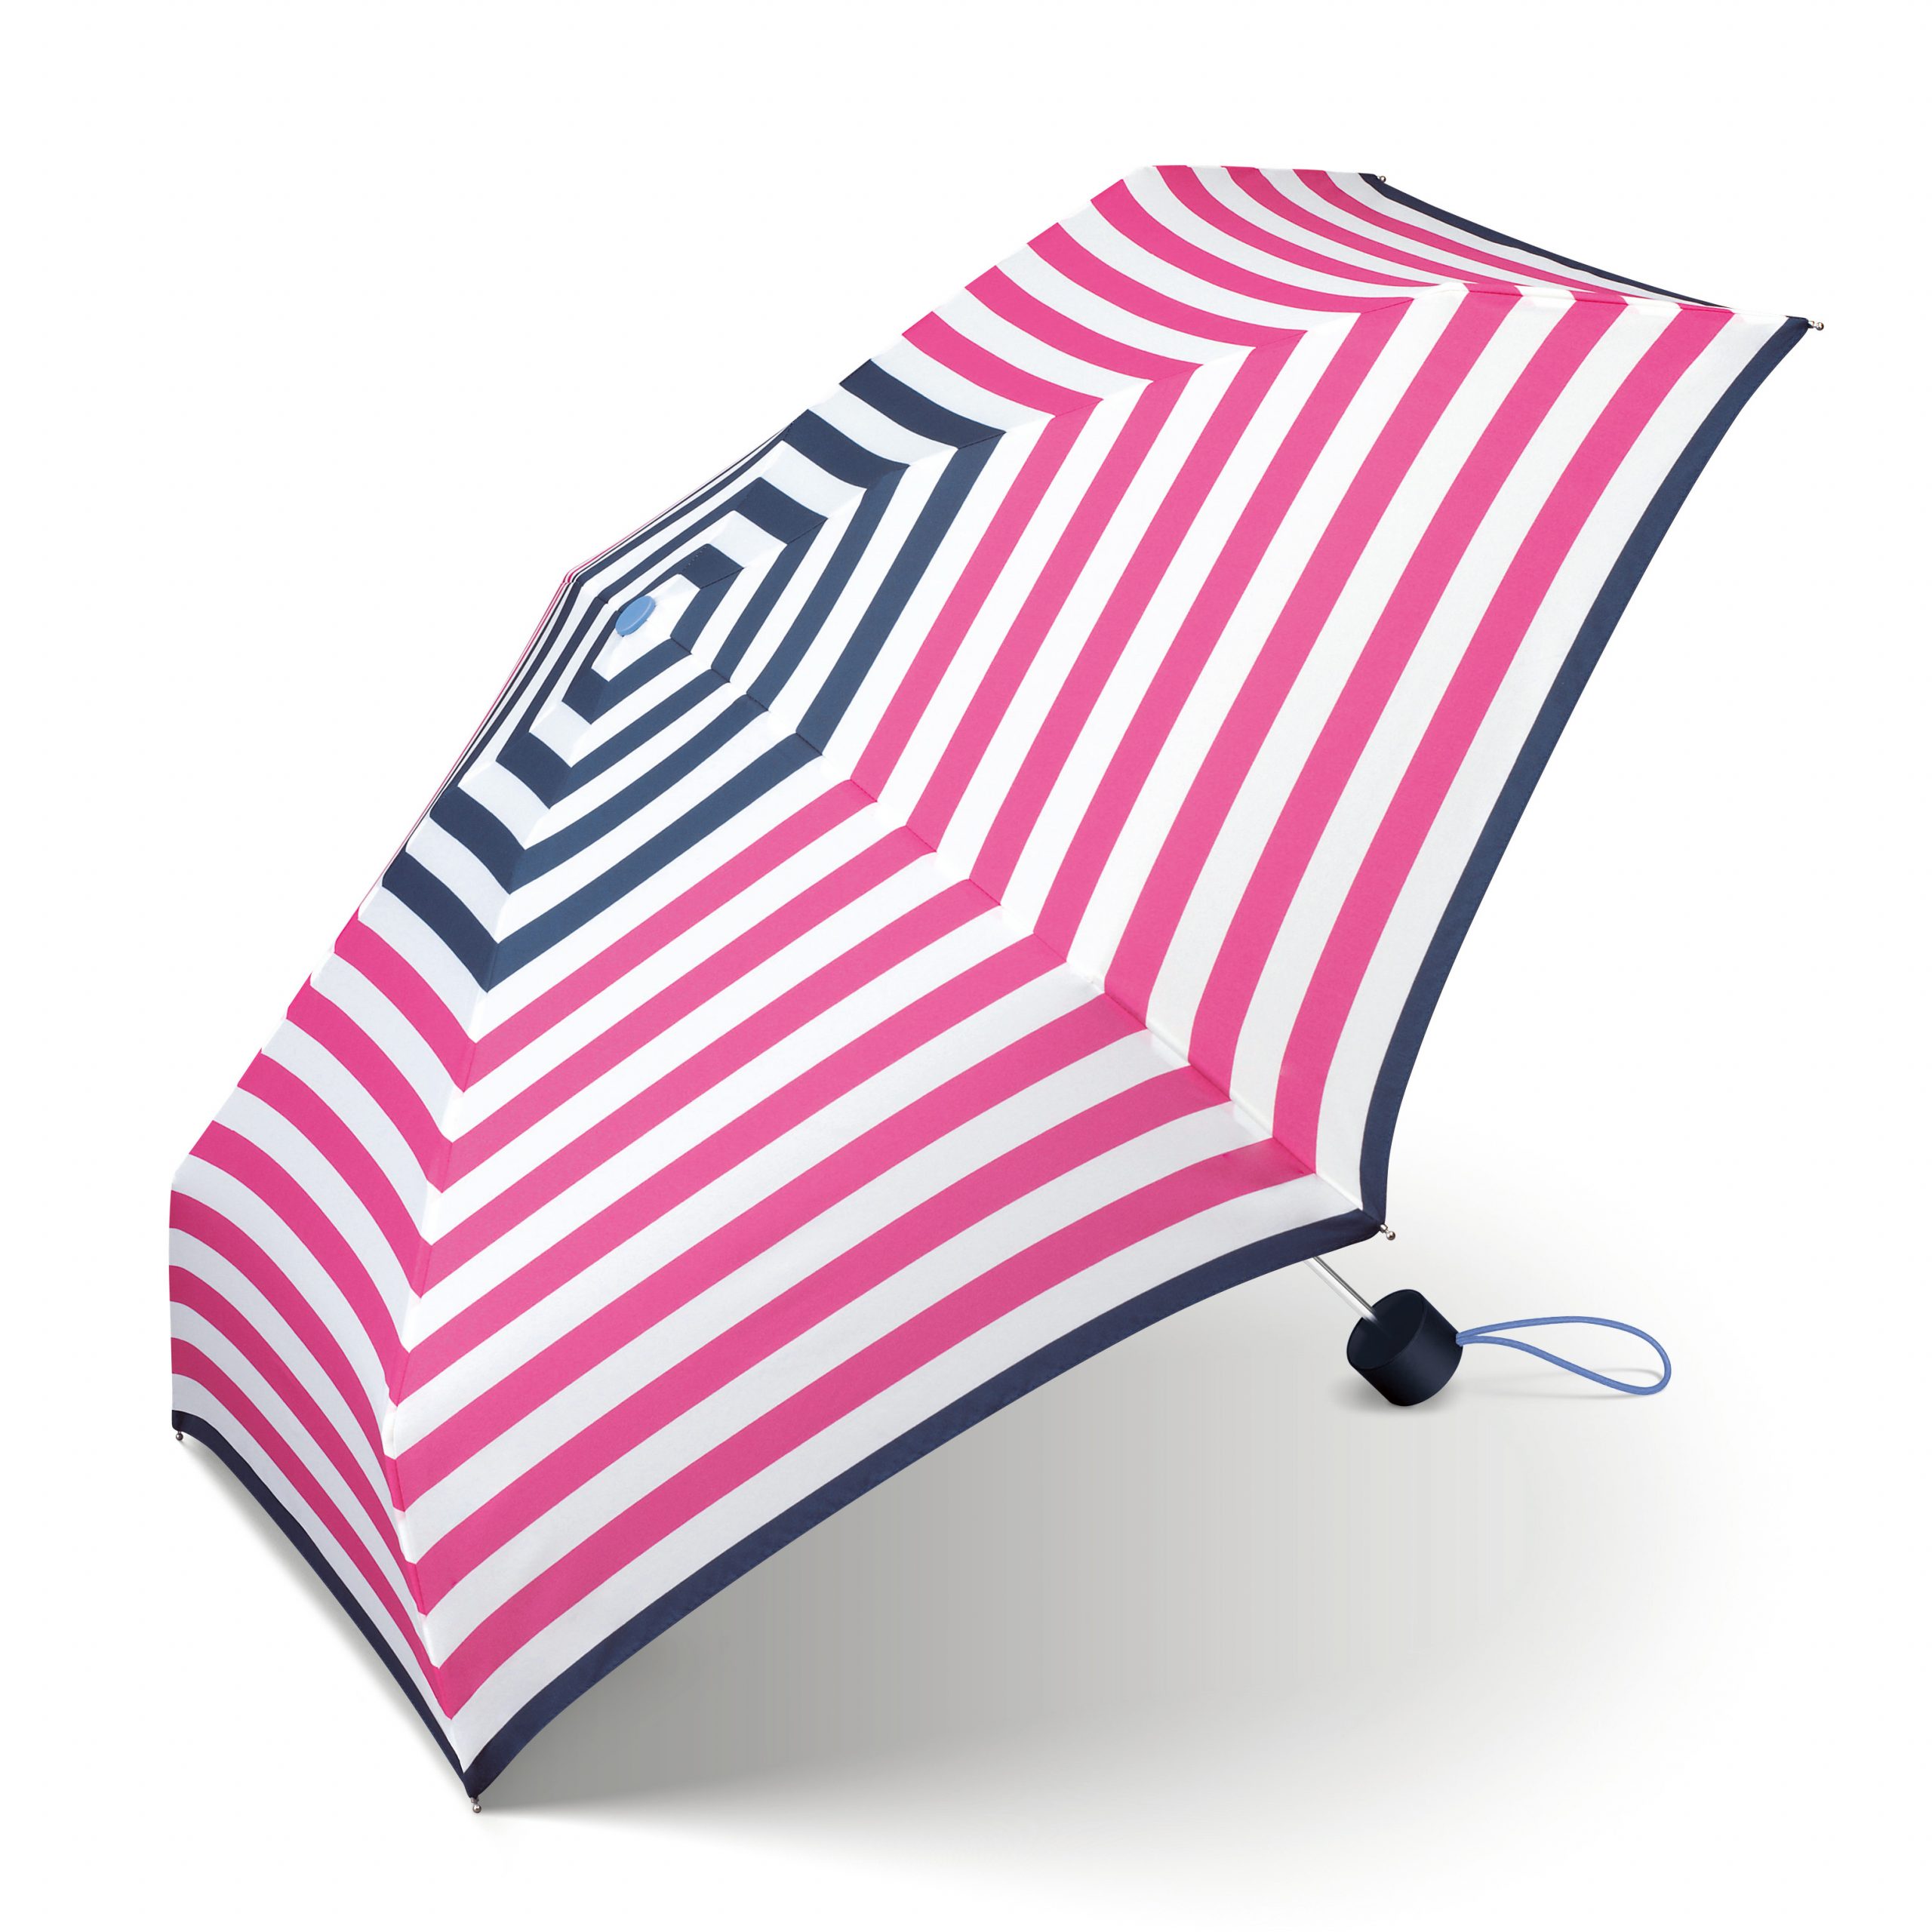 Paraguas plegable mini Esprit Rayas azul) Outlet, Paraguas Esprit, Paraguas Originales, plegable Mujer - Que puedo Regalar